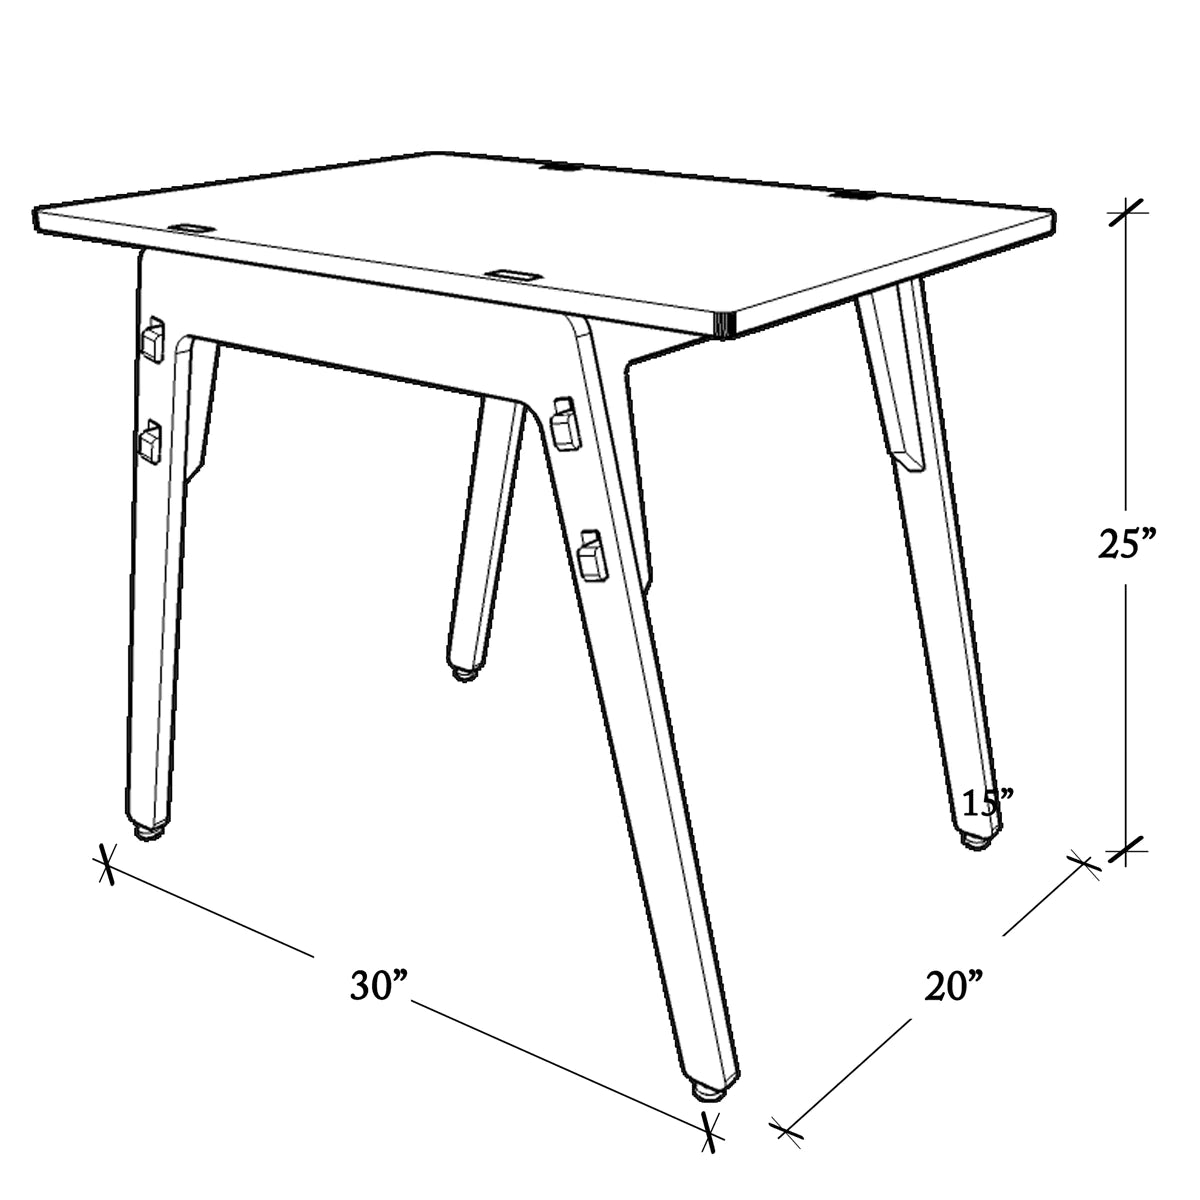 Buy Black Kiwi Wooden Table - Green - Dimensions - SkilloToys.com